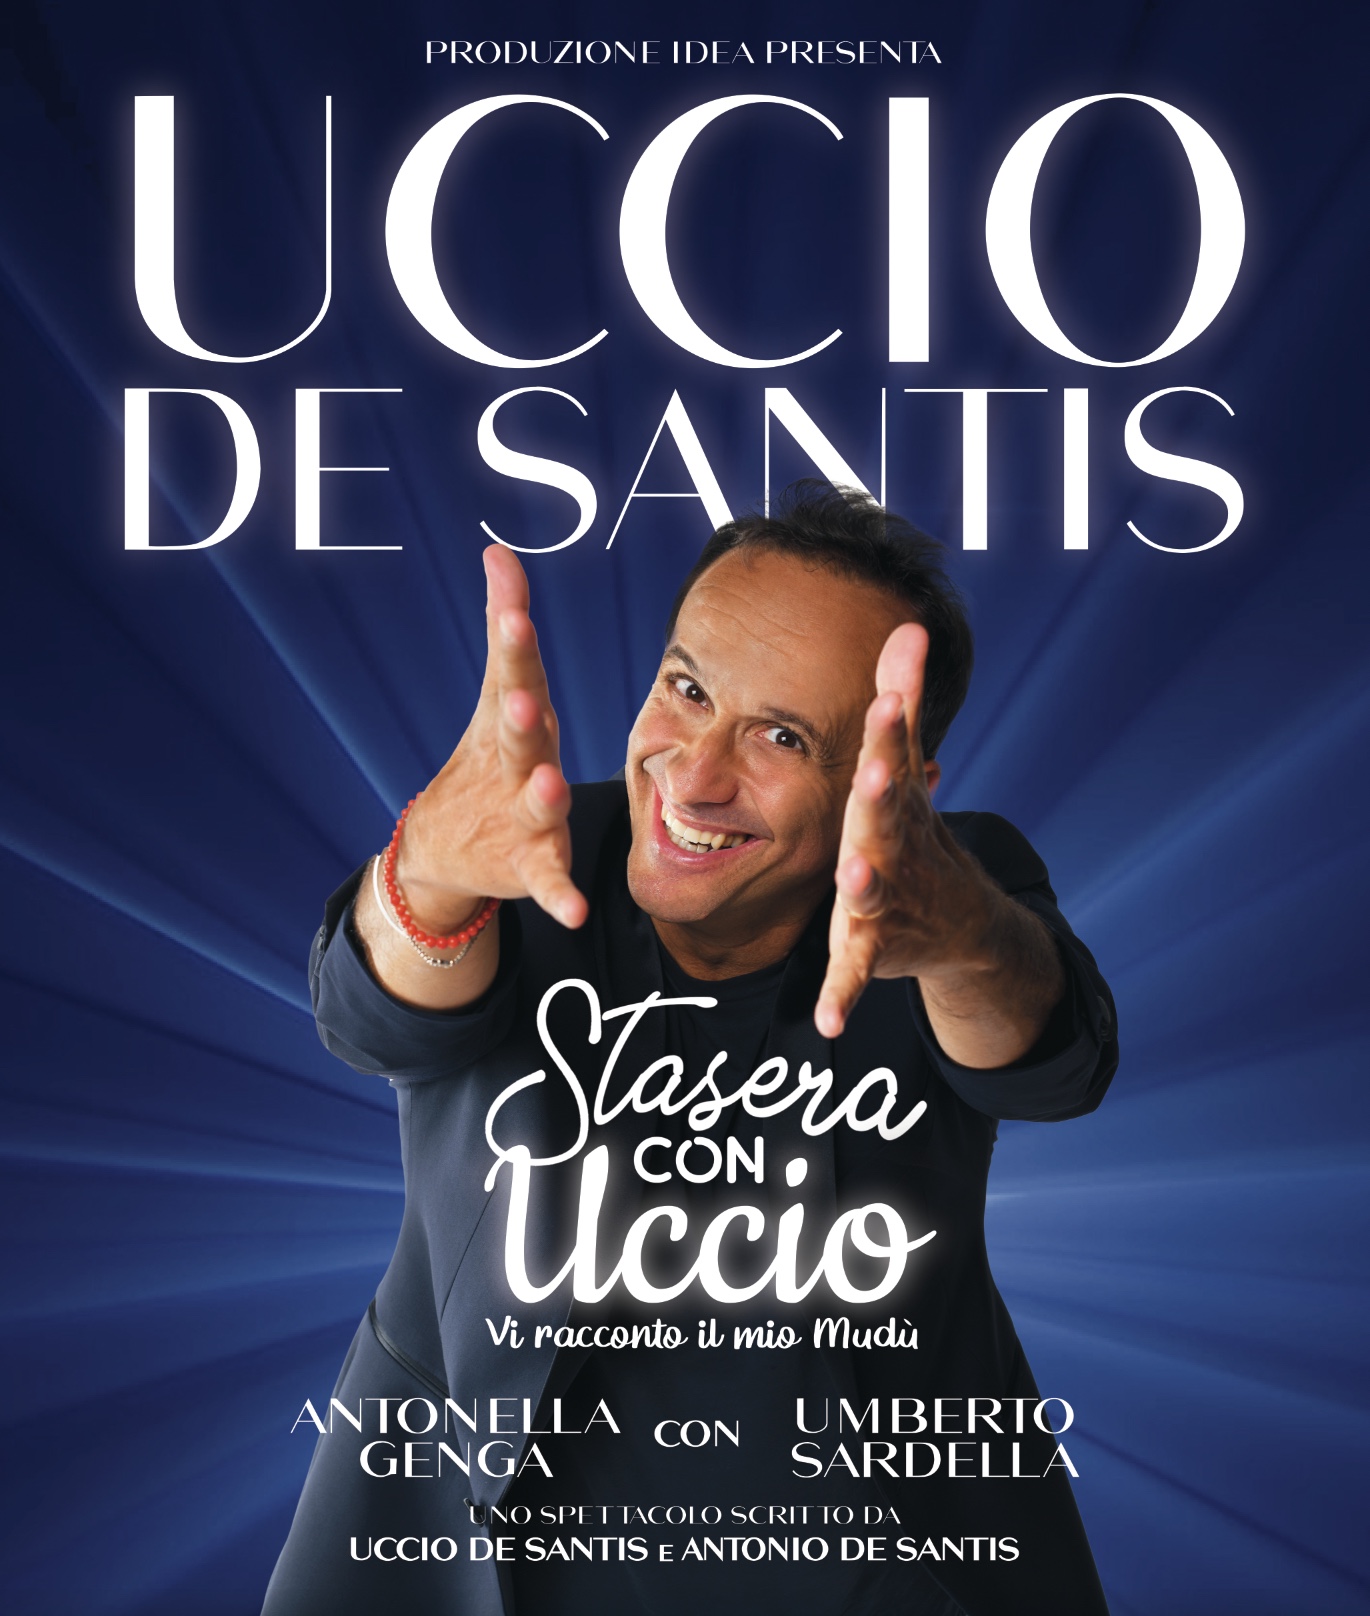 Uccio de Santis in “Stasera con Uccio” 17 MARZO 2023 - Venerdì ORE 21.00